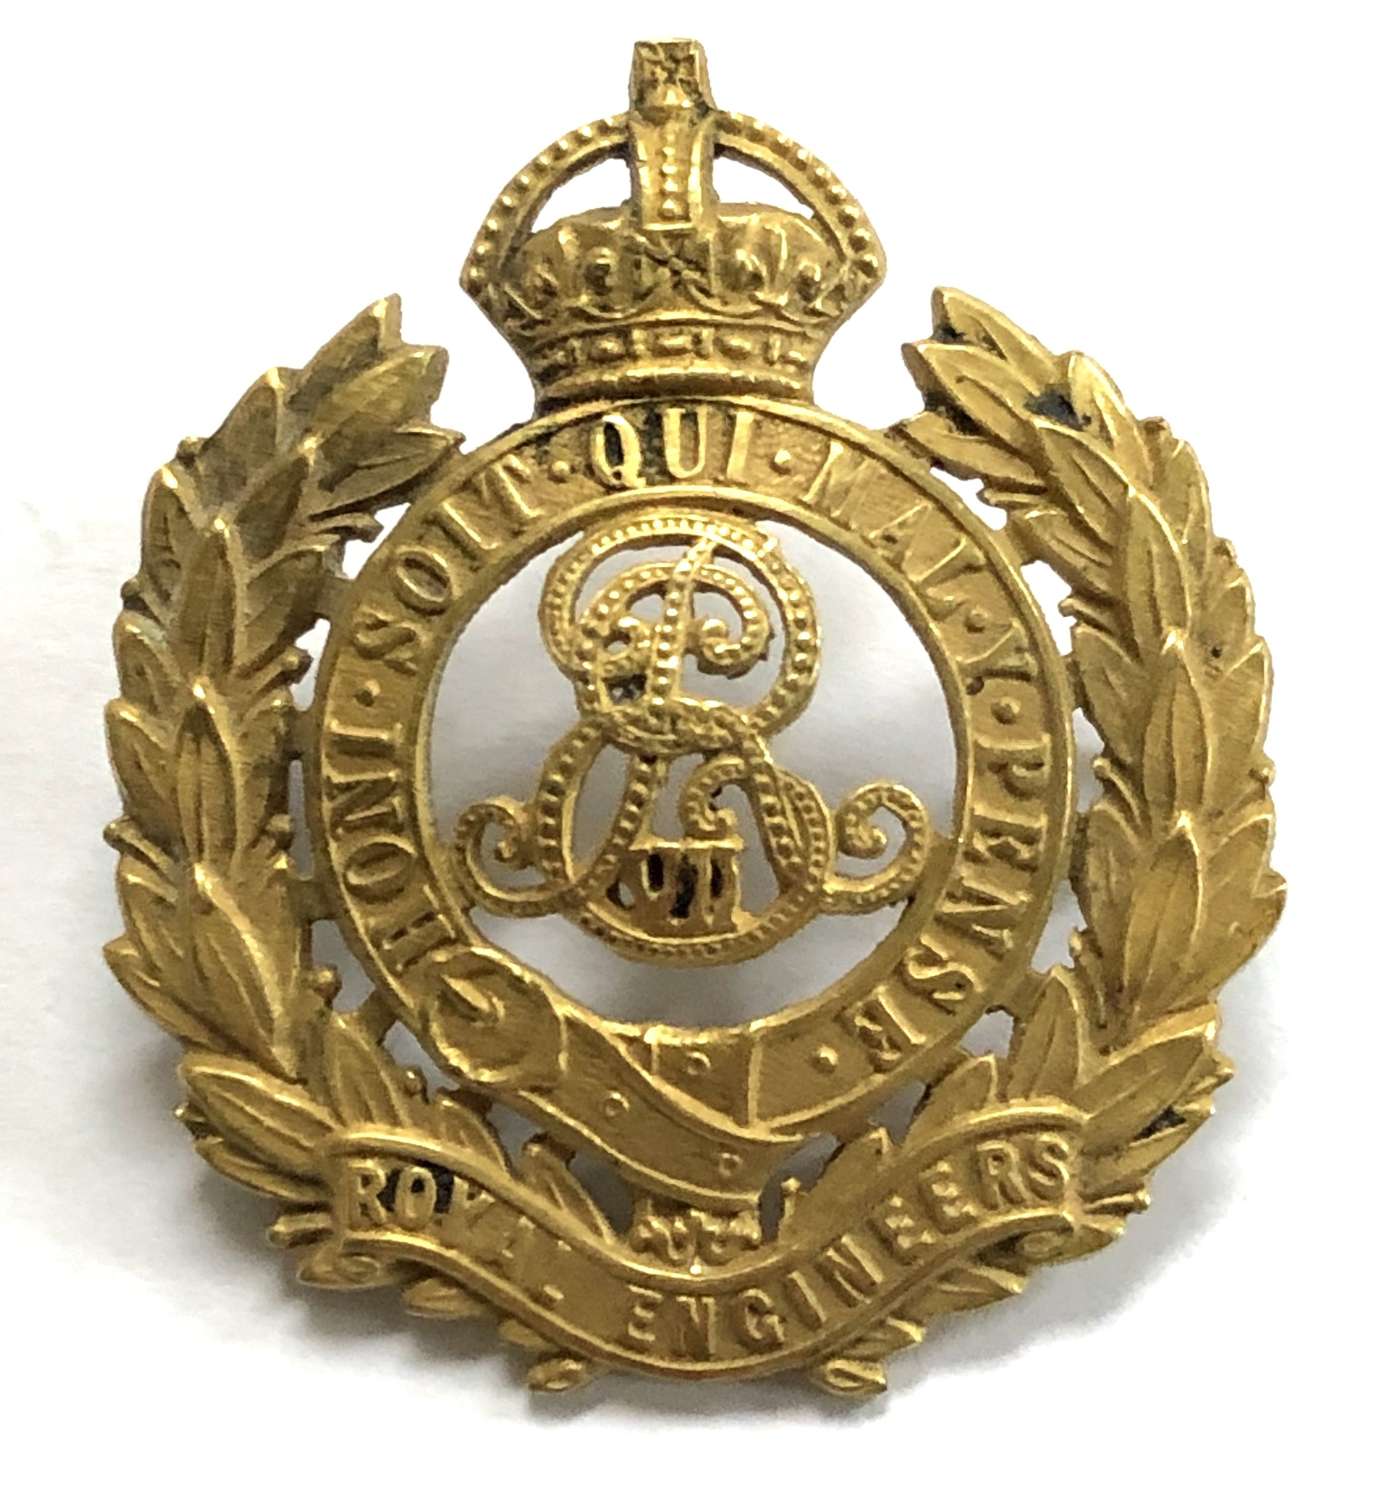 Royal Engineers Edwardian Officer's cap badge circa 1901-10